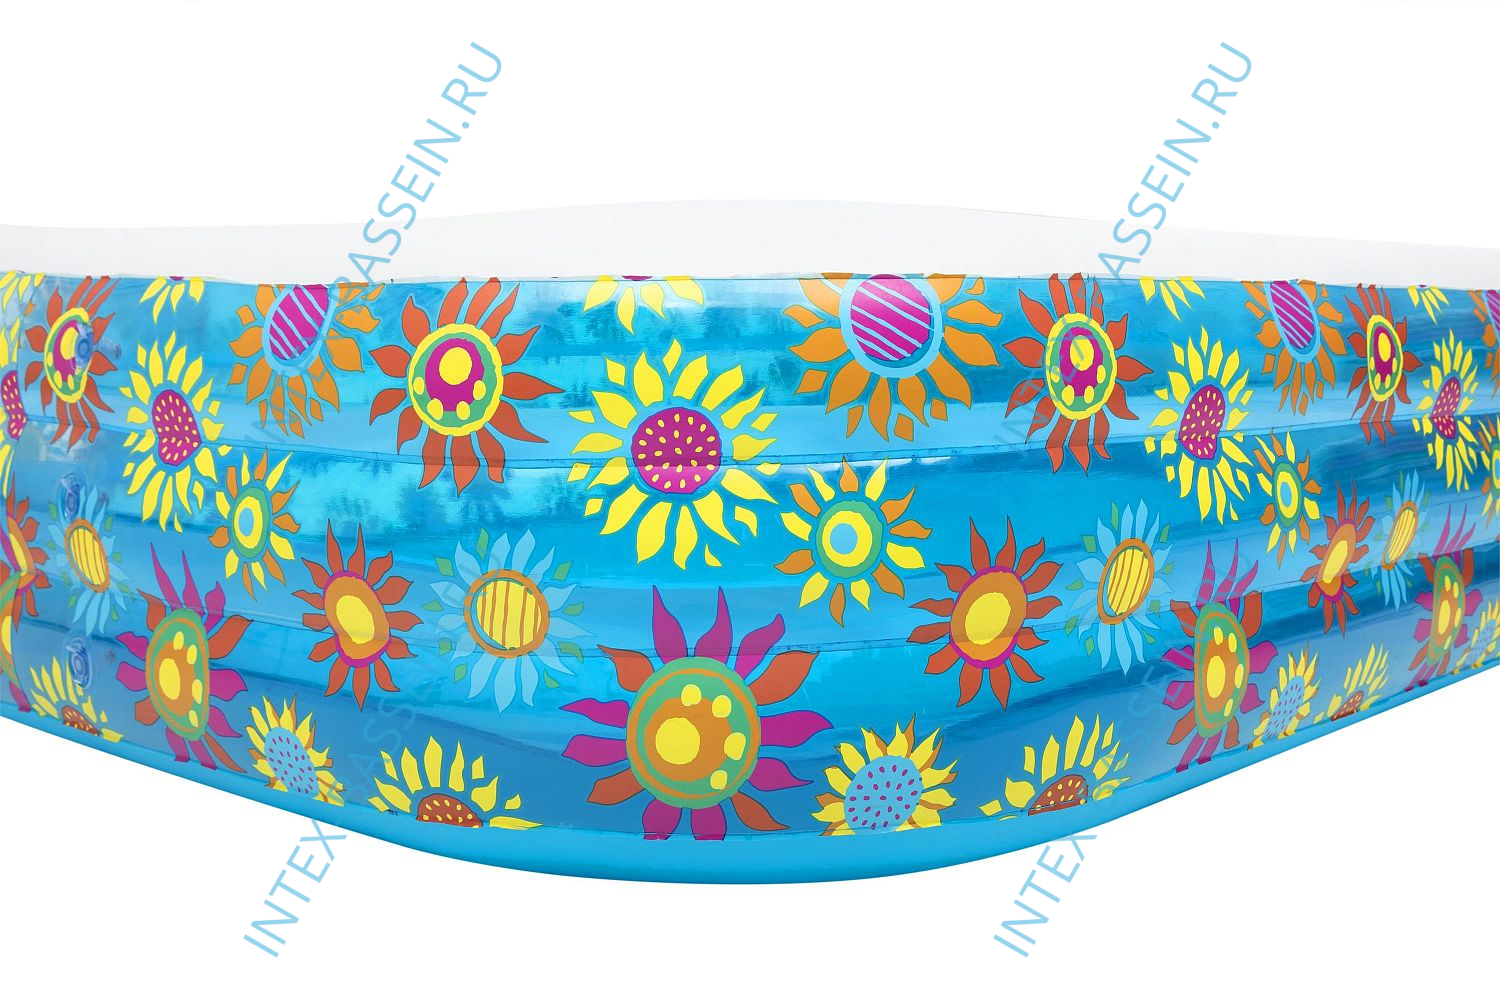 Детский надувной бассейн Bestway "Happy Flora" 3.05 x 1.83 x 0.56 м, артикул 54121